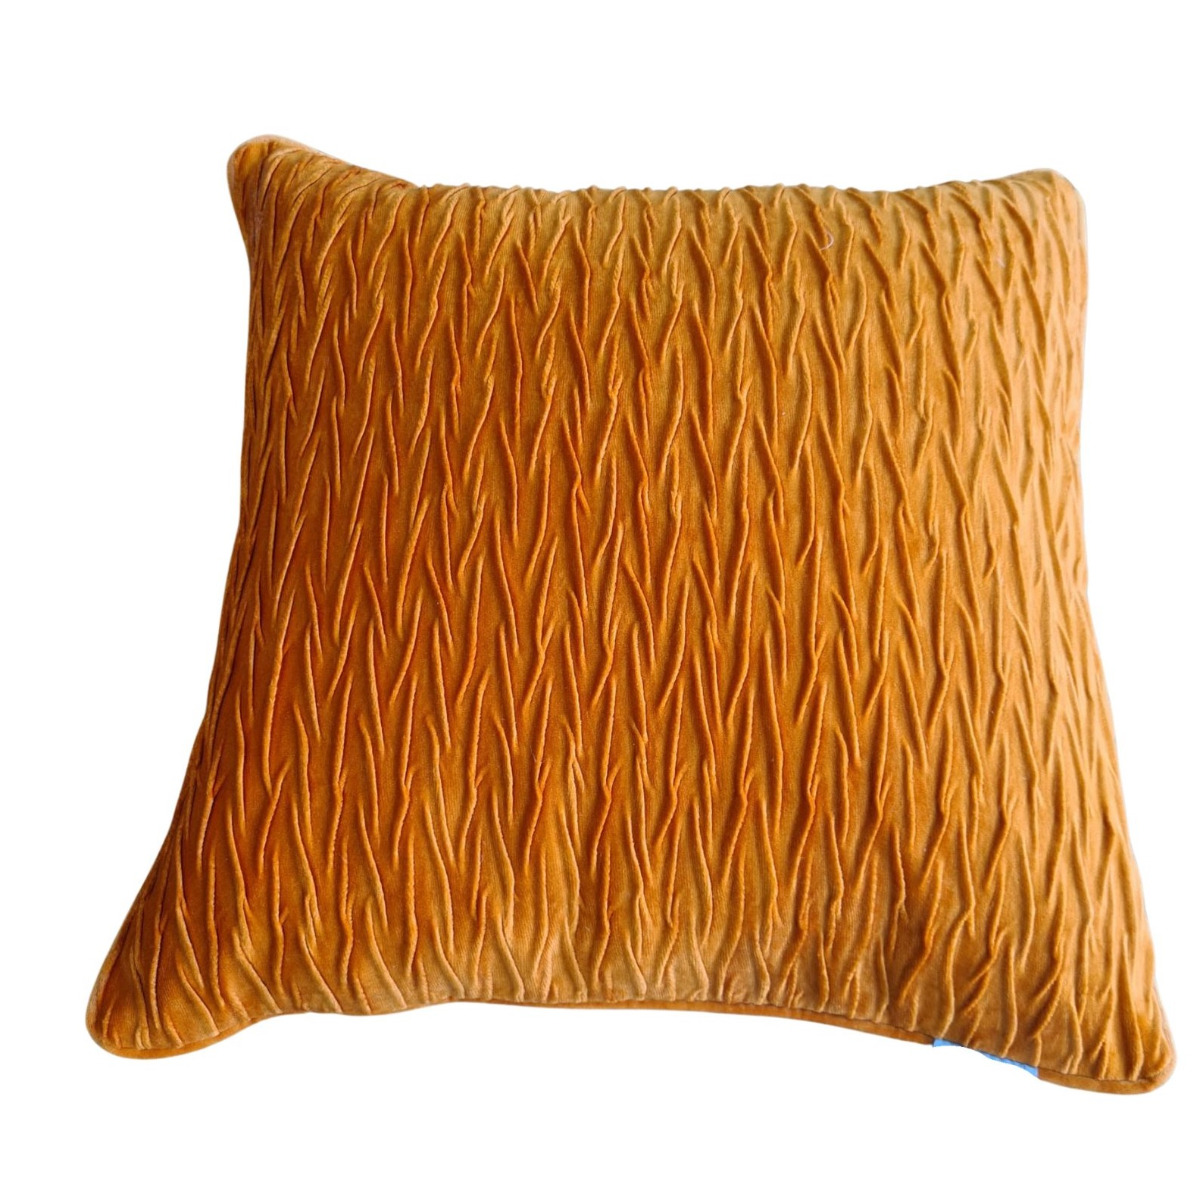 Defined Wave Cushion